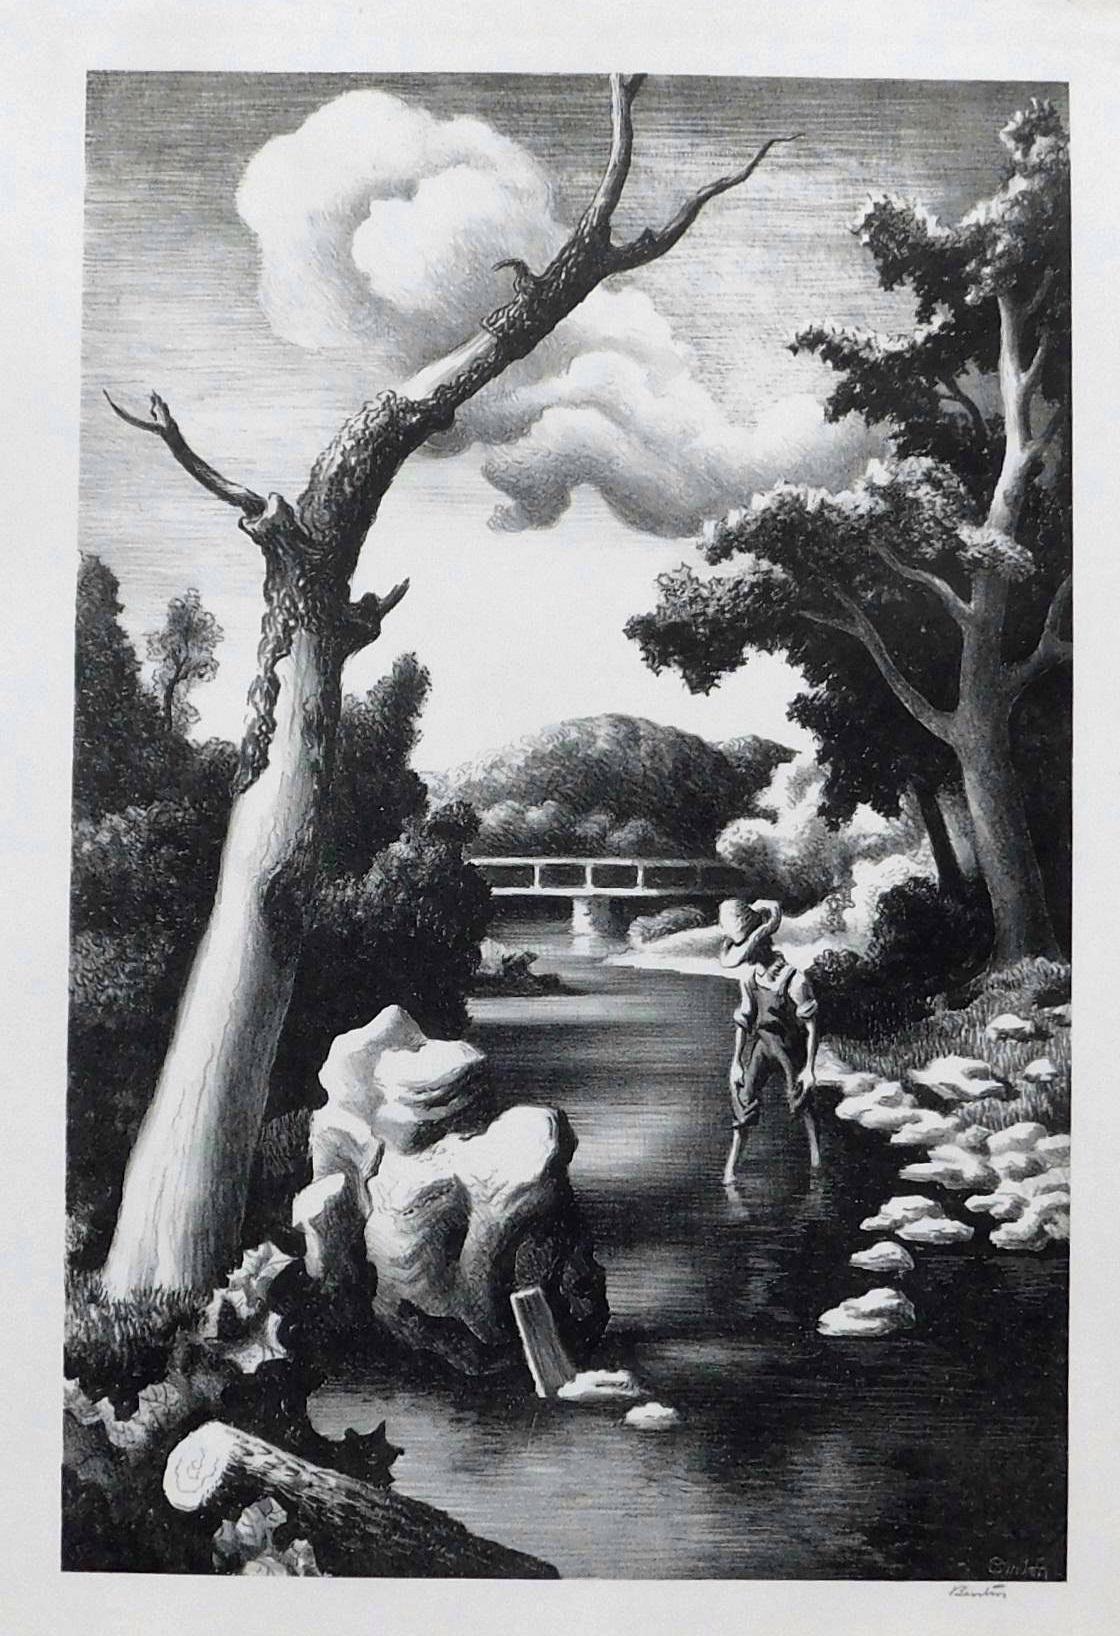 Thomas Hart Benton Original Lithograph, 1939 - "Shallow Creek" For Sale